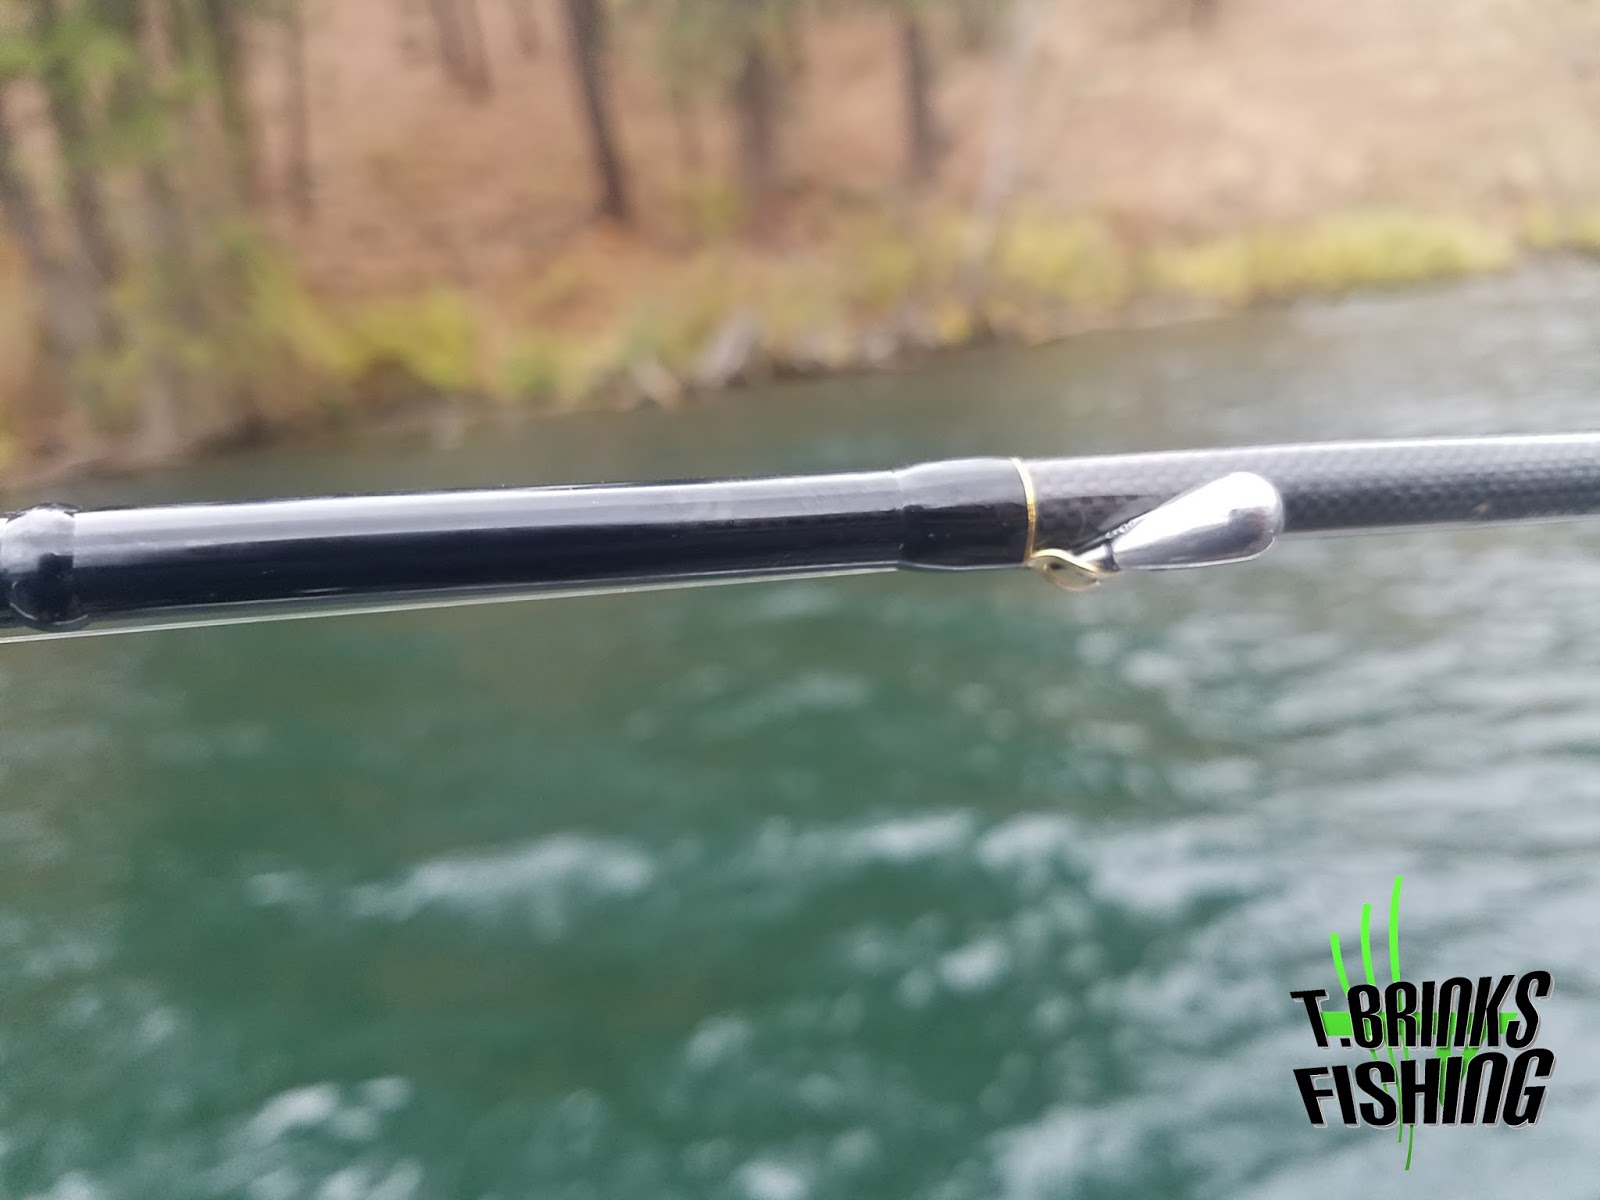 T Brinks Fishing: Favorite Fishing Jack Hammer Review